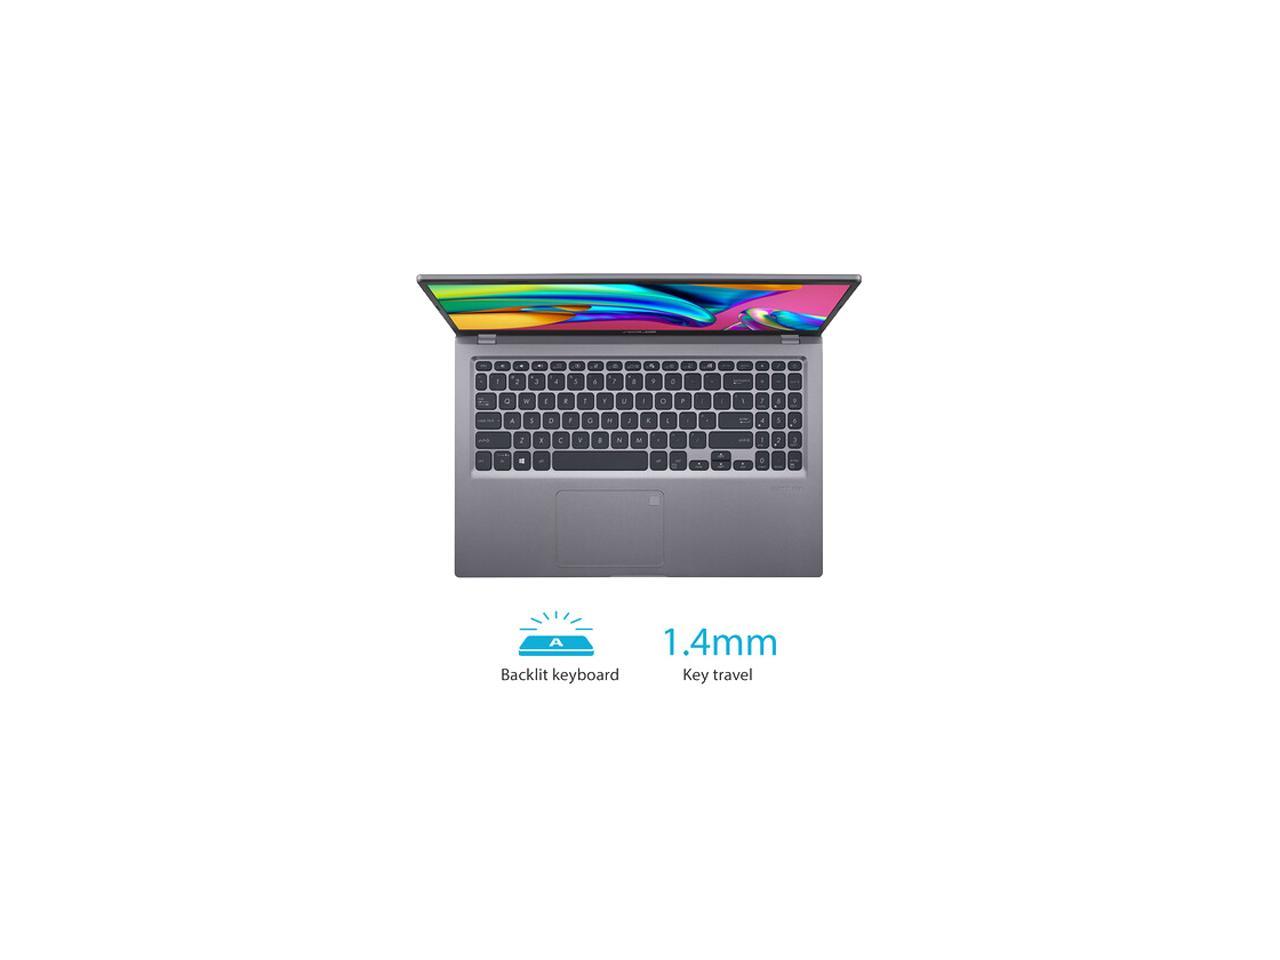 ASUS VivoBook 15 F515 Thin and Light Laptop, 15.6" FHD Display, Core i7-1165G7 Processor, Iris Xe Graphics, 8GB DDR4 RAM, 512GB SSD, Fingerprint, Windows 11 Home, Slate Grey, F515EA-DH75